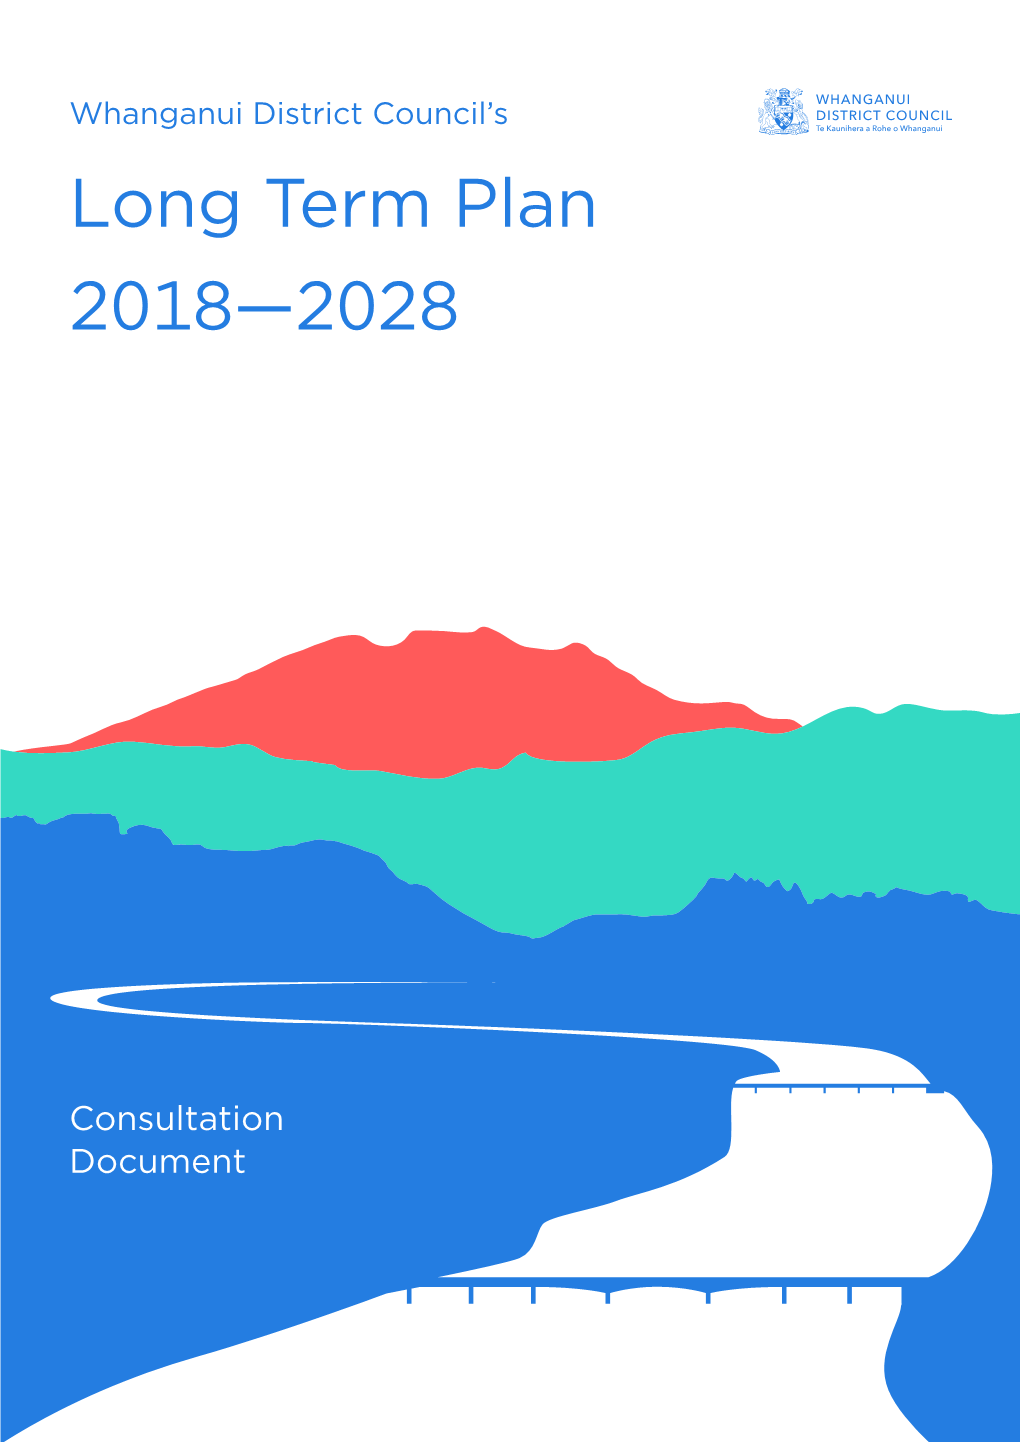 Long Term Plan 2018—2028